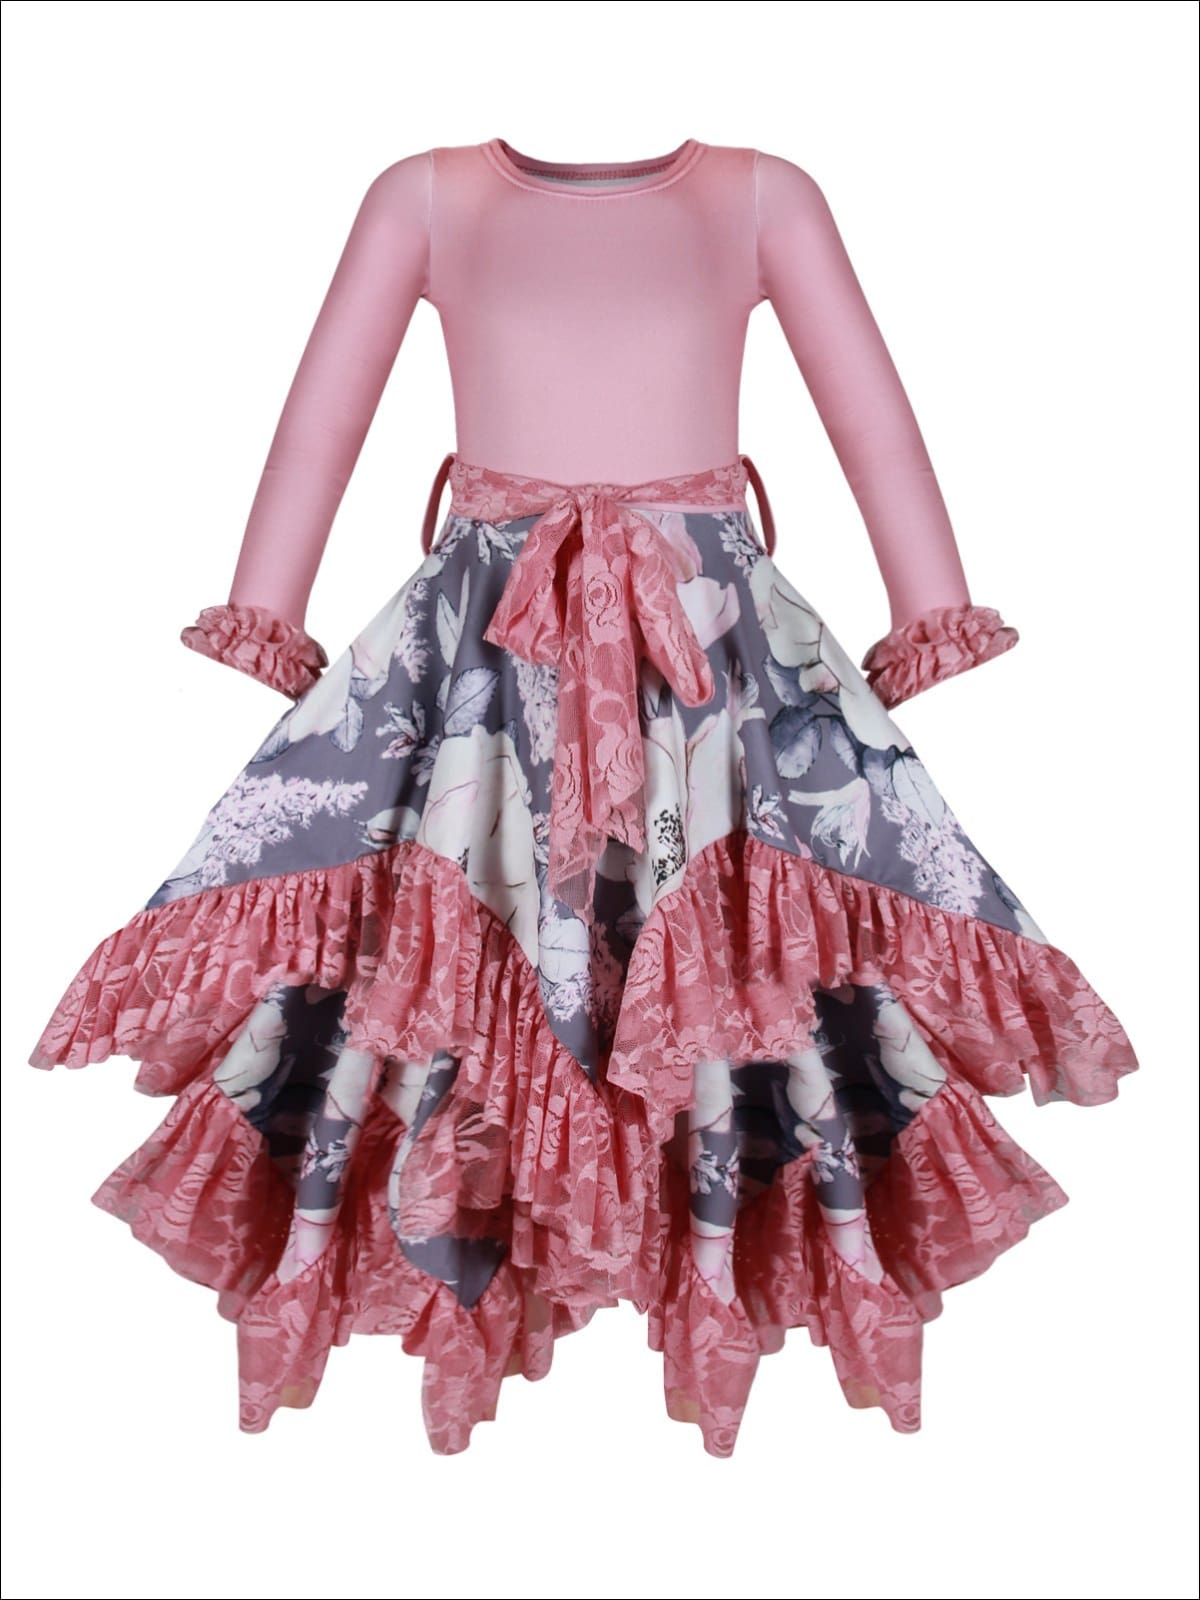 Girls Double Layer Handkerchief Dress with Lace Ruffles - Pink / 2T-3T - Girls Fall Dressy Dress